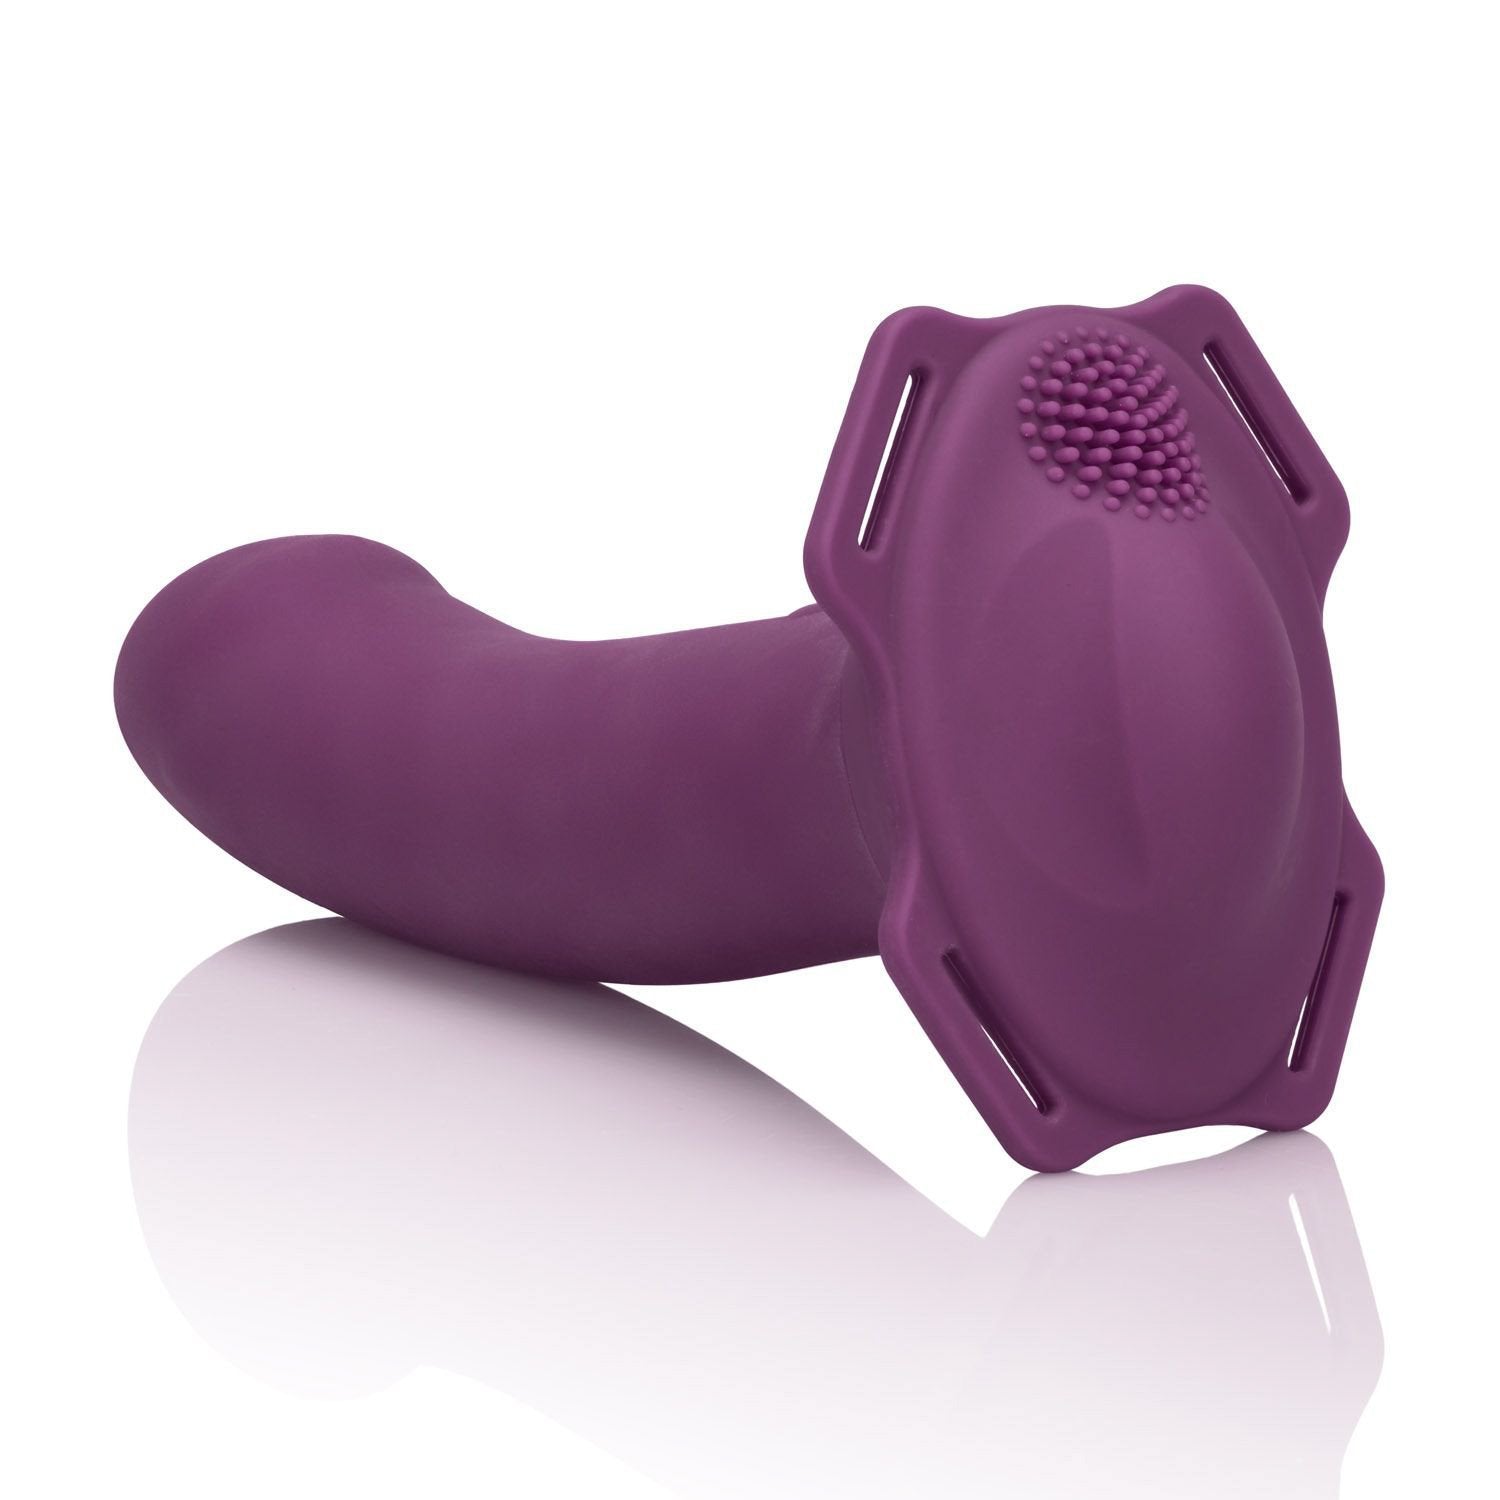 California Exotics - Me2 Rumbler Strap On Vibrating Dildo (Purple) -  Strap On with Non hollow Dildo for Female (Vibration) Rechargeable  Durio.sg